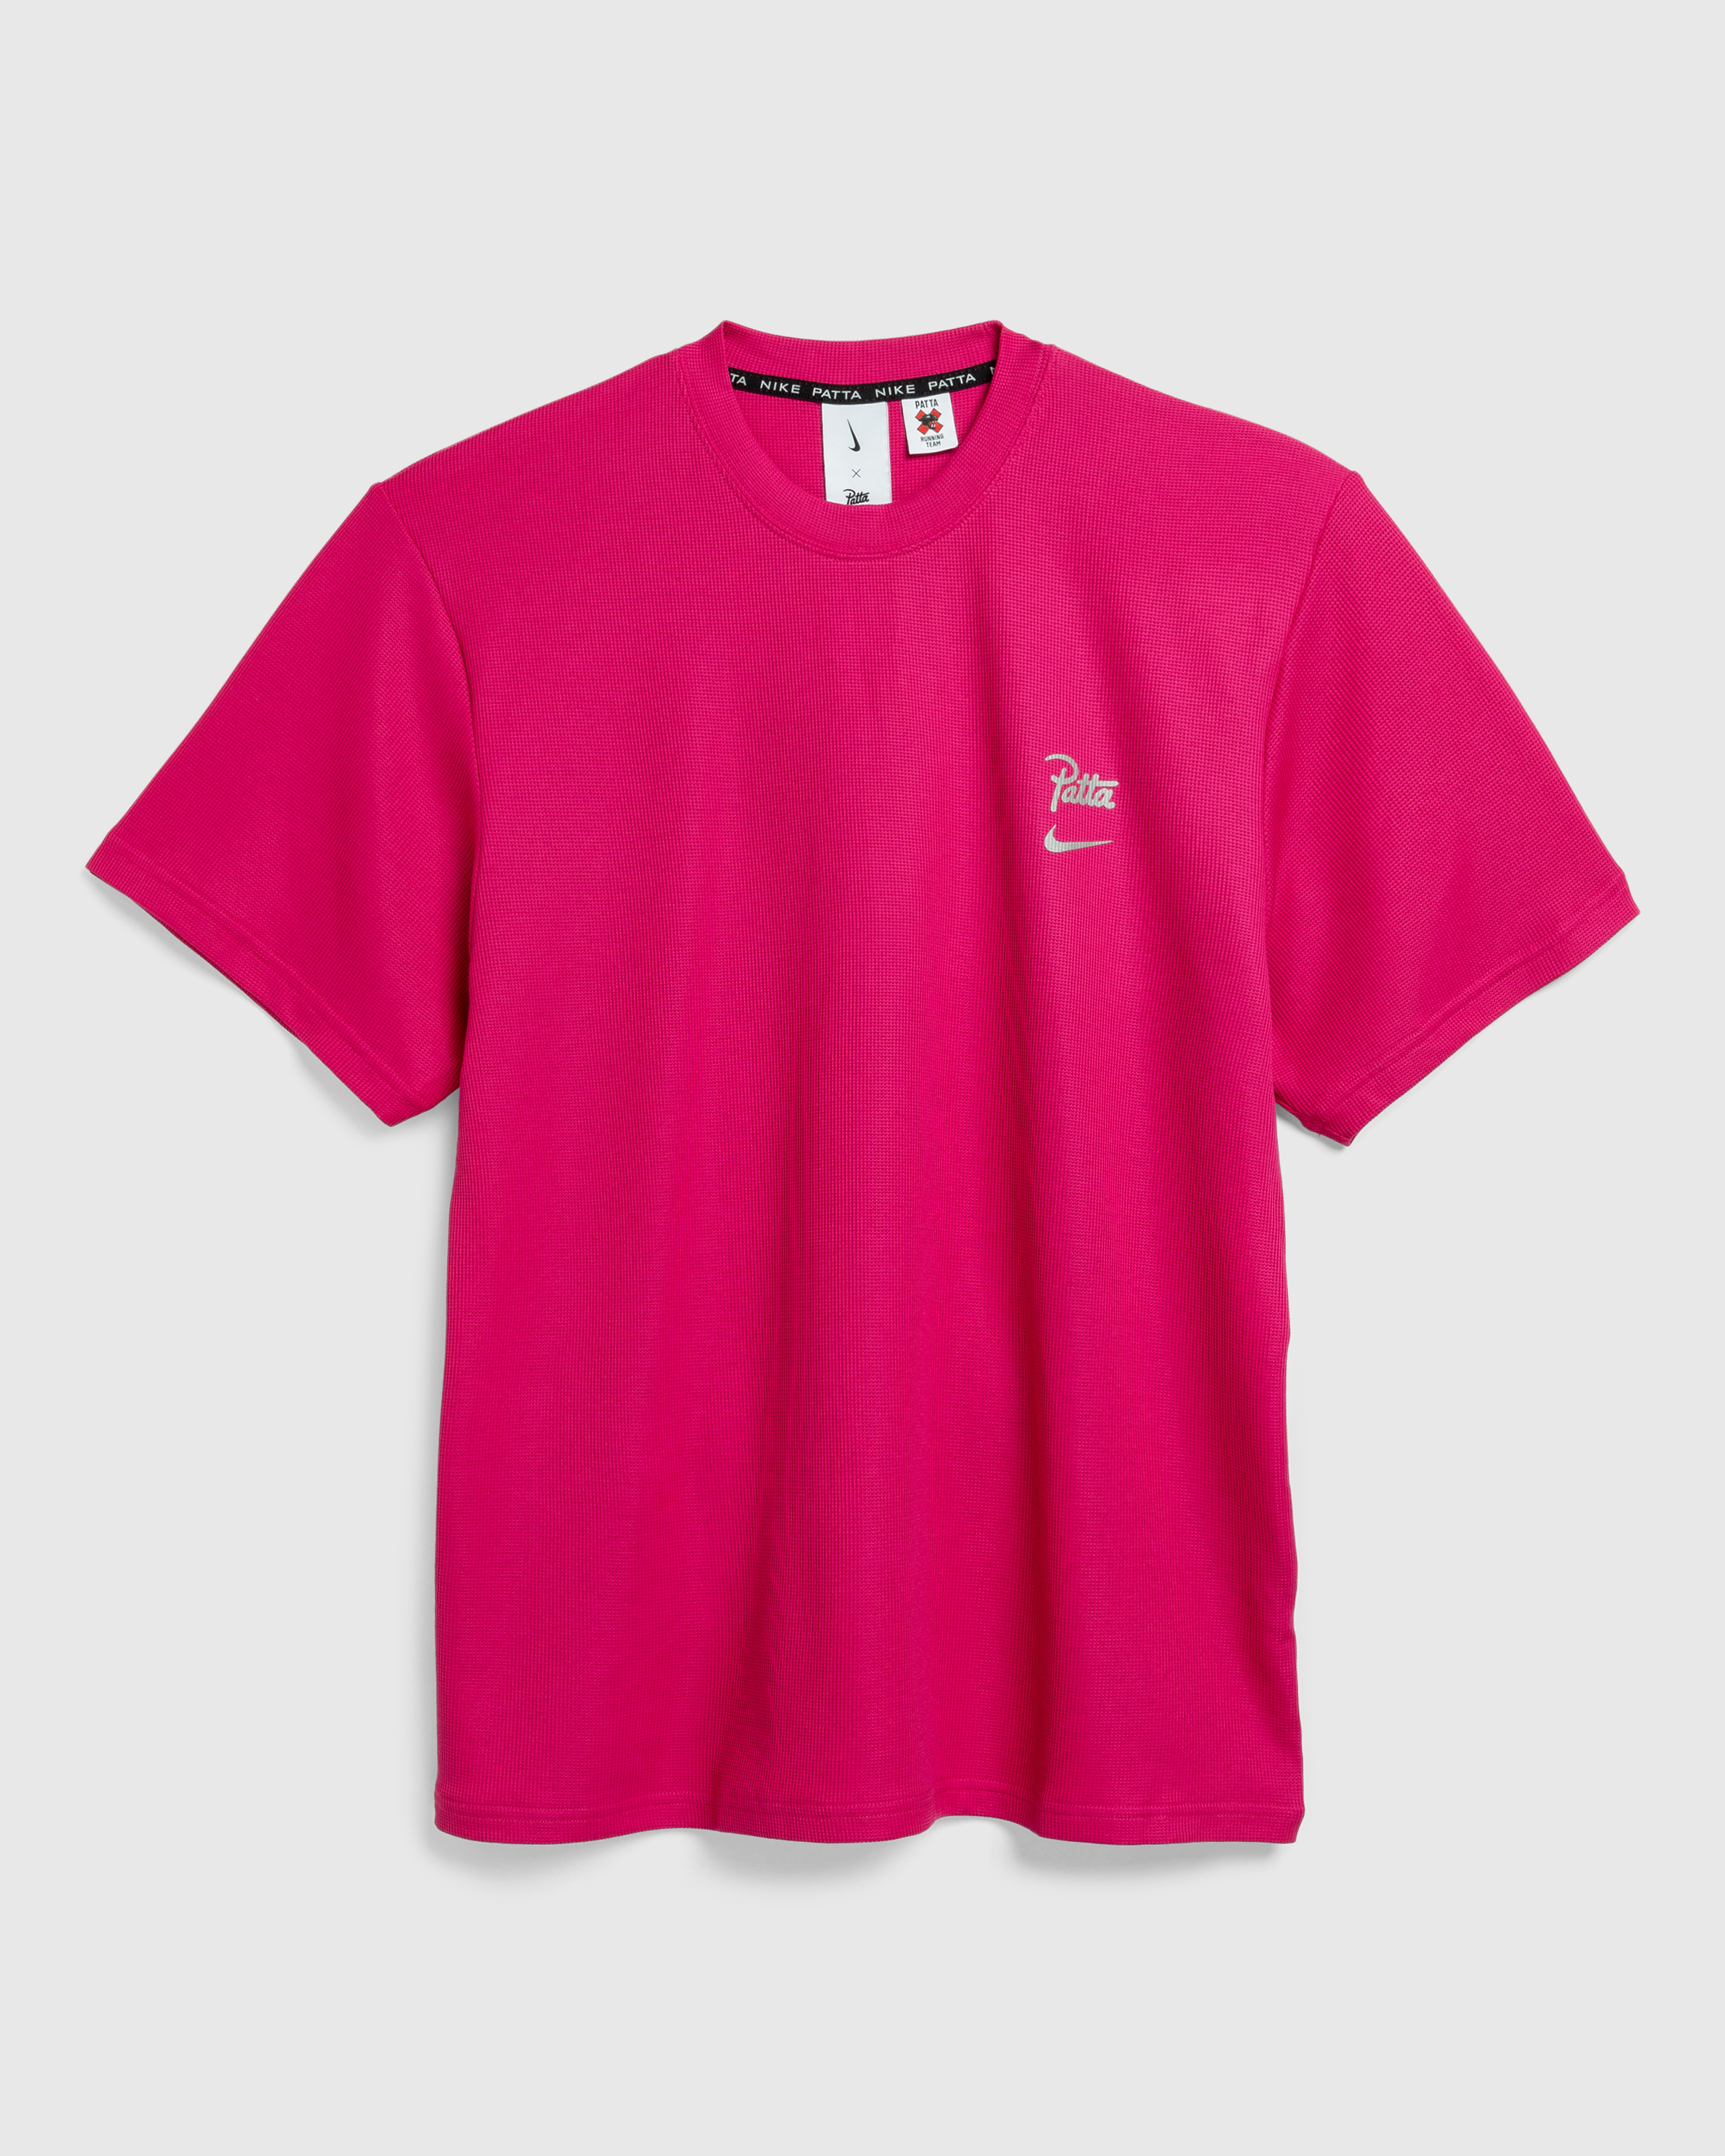 Nike x Patta – Running Team T-Shirt Fireberry - T-Shirts - Red - Image 1